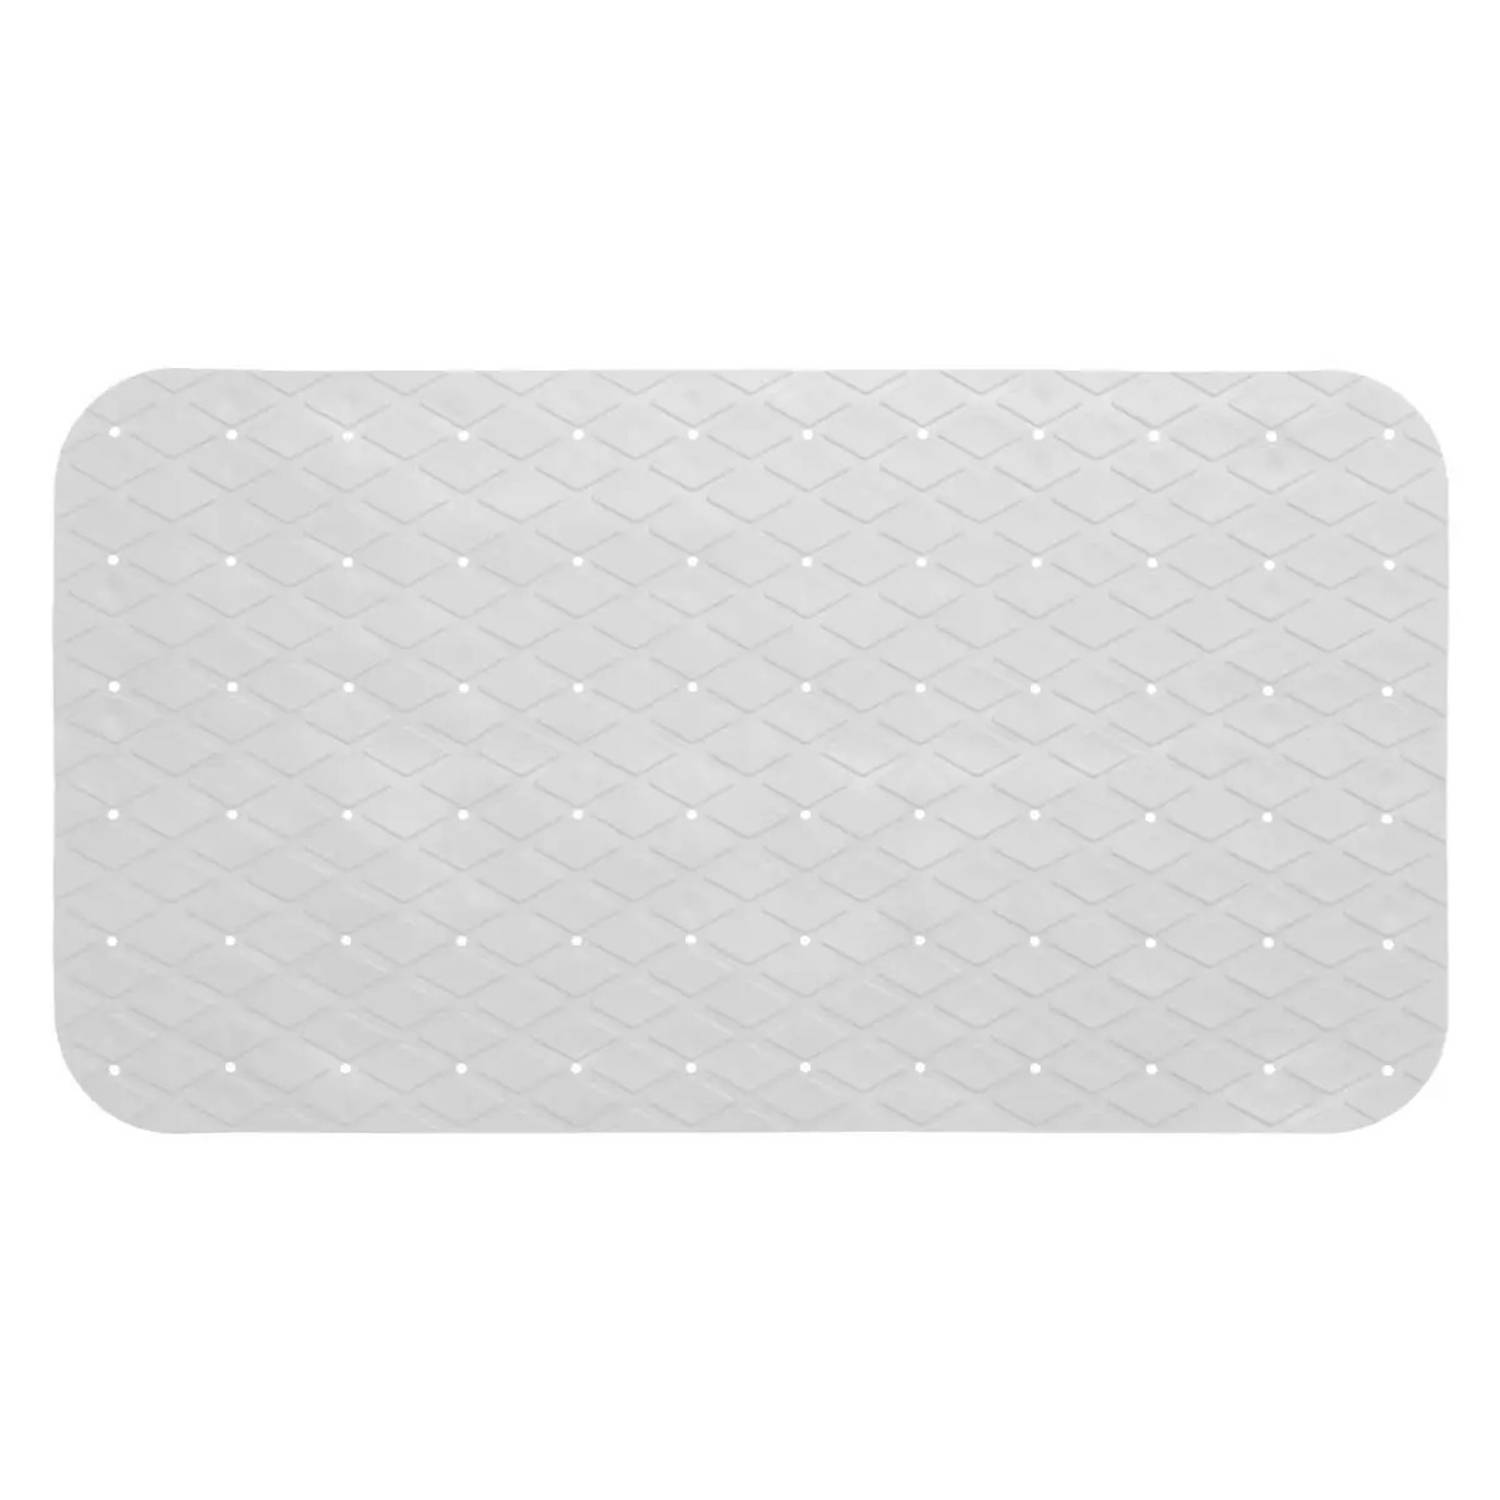 Anti-slip badkamer douche/bad mat wit 70 x 35 cm rechthoekig - Badmatjes